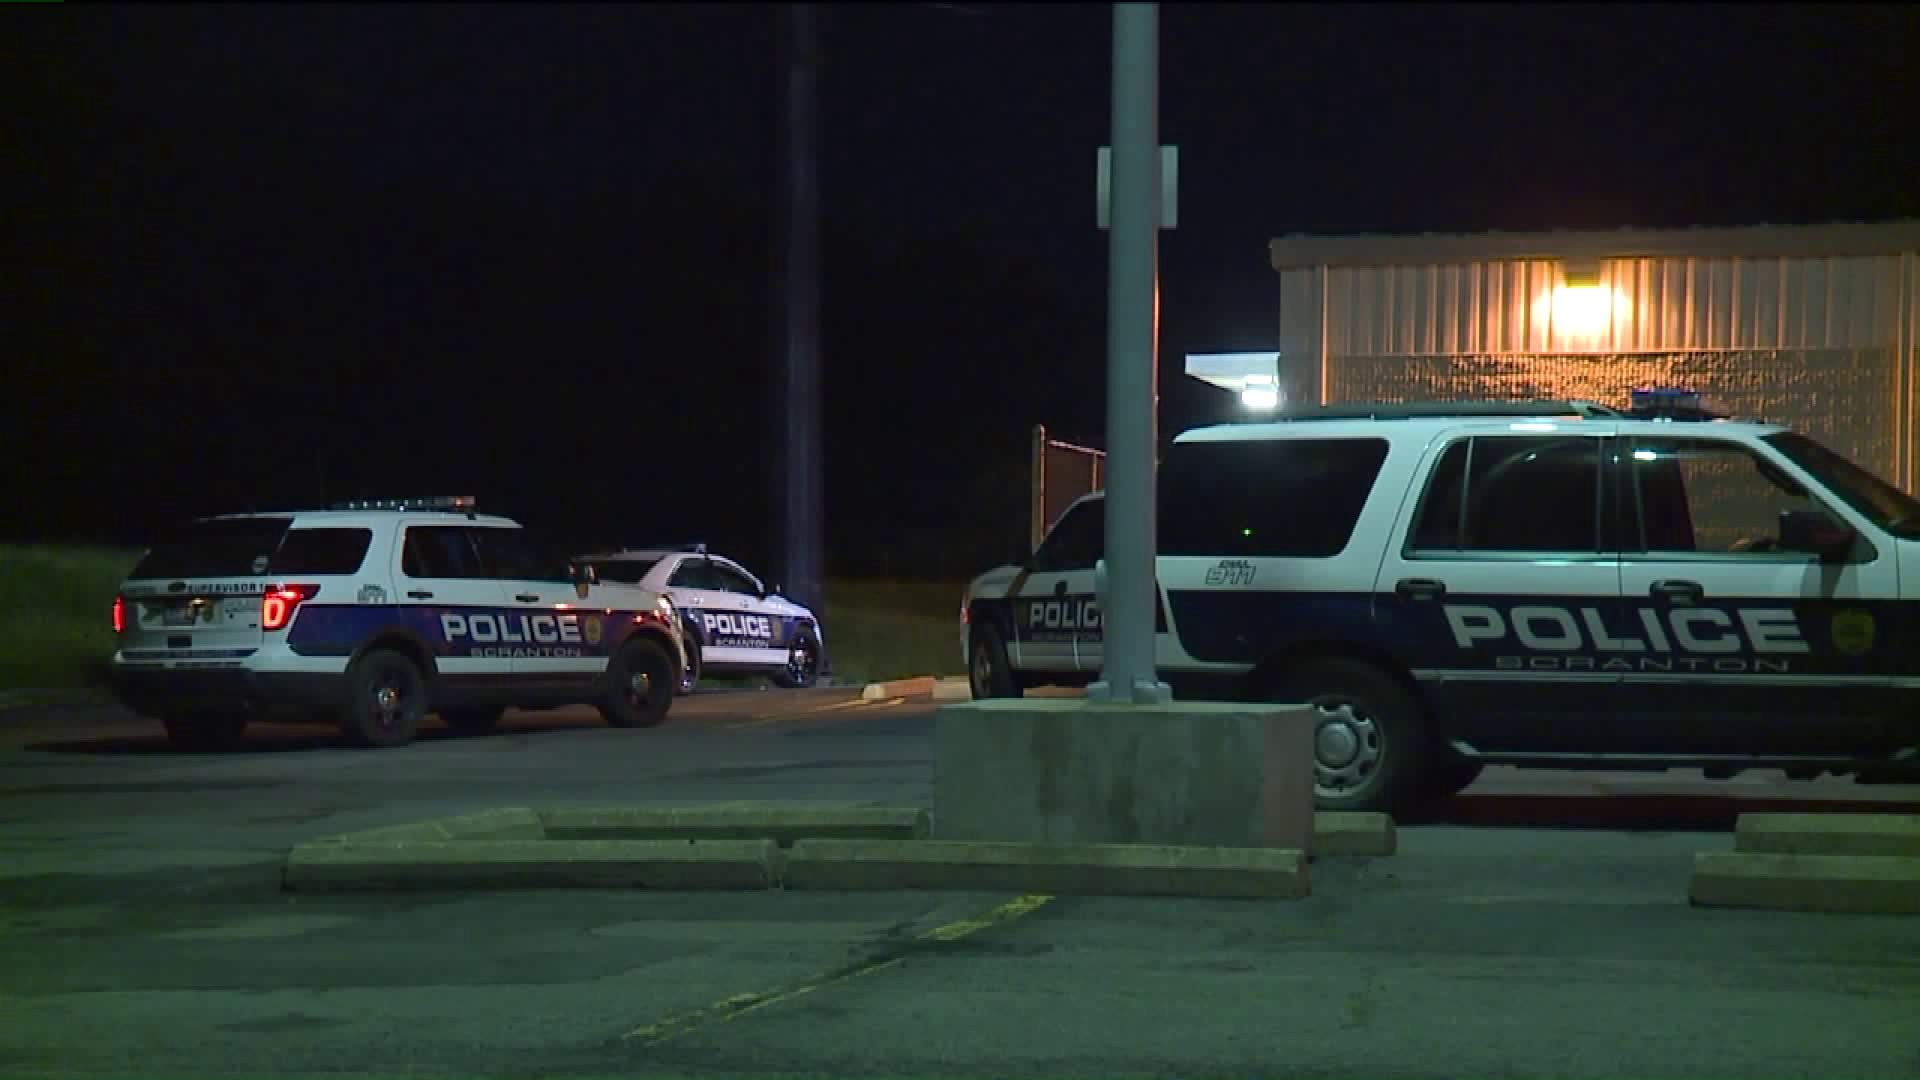 Police Investigating Early Morning Shooting in Scranton